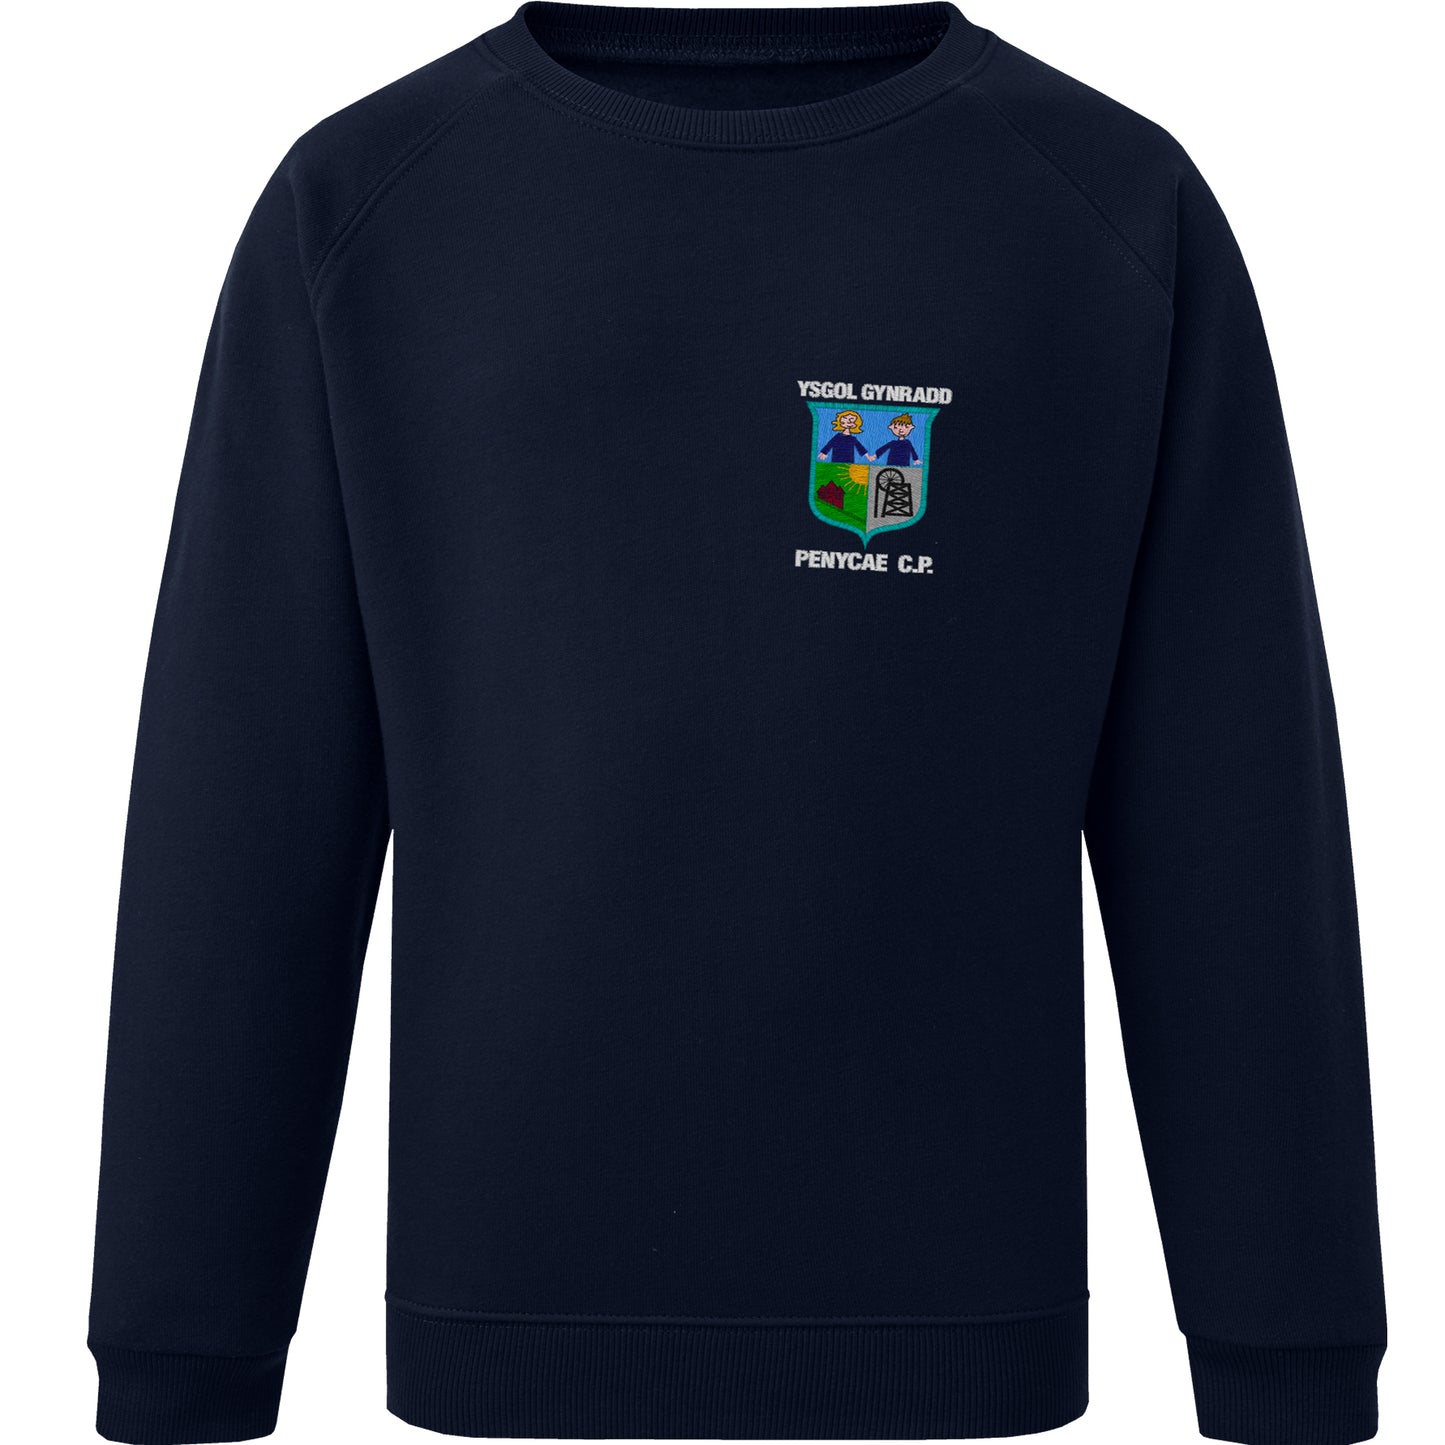 Ysgol Penycae School Sweater supplied by Ourschoolwear of Wrexham